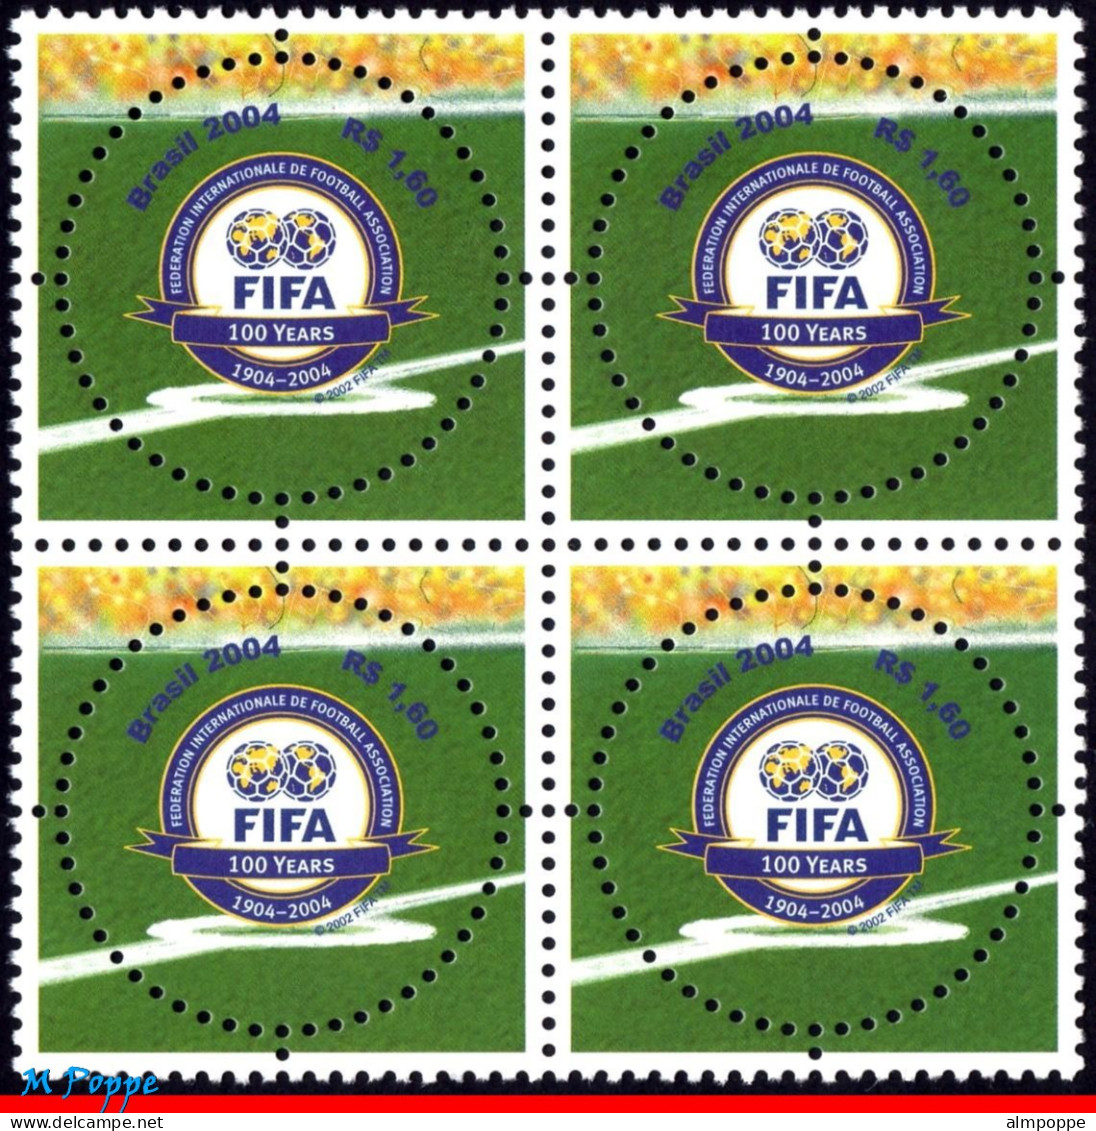 Ref. BR-2924-Q BRAZIL 2004 - FIFA CENTENARY, SPORT,MI# 3357, BLOCK MNH, FOOTBALL SOCCER 4V Sc# 2924 - Blocchi & Foglietti